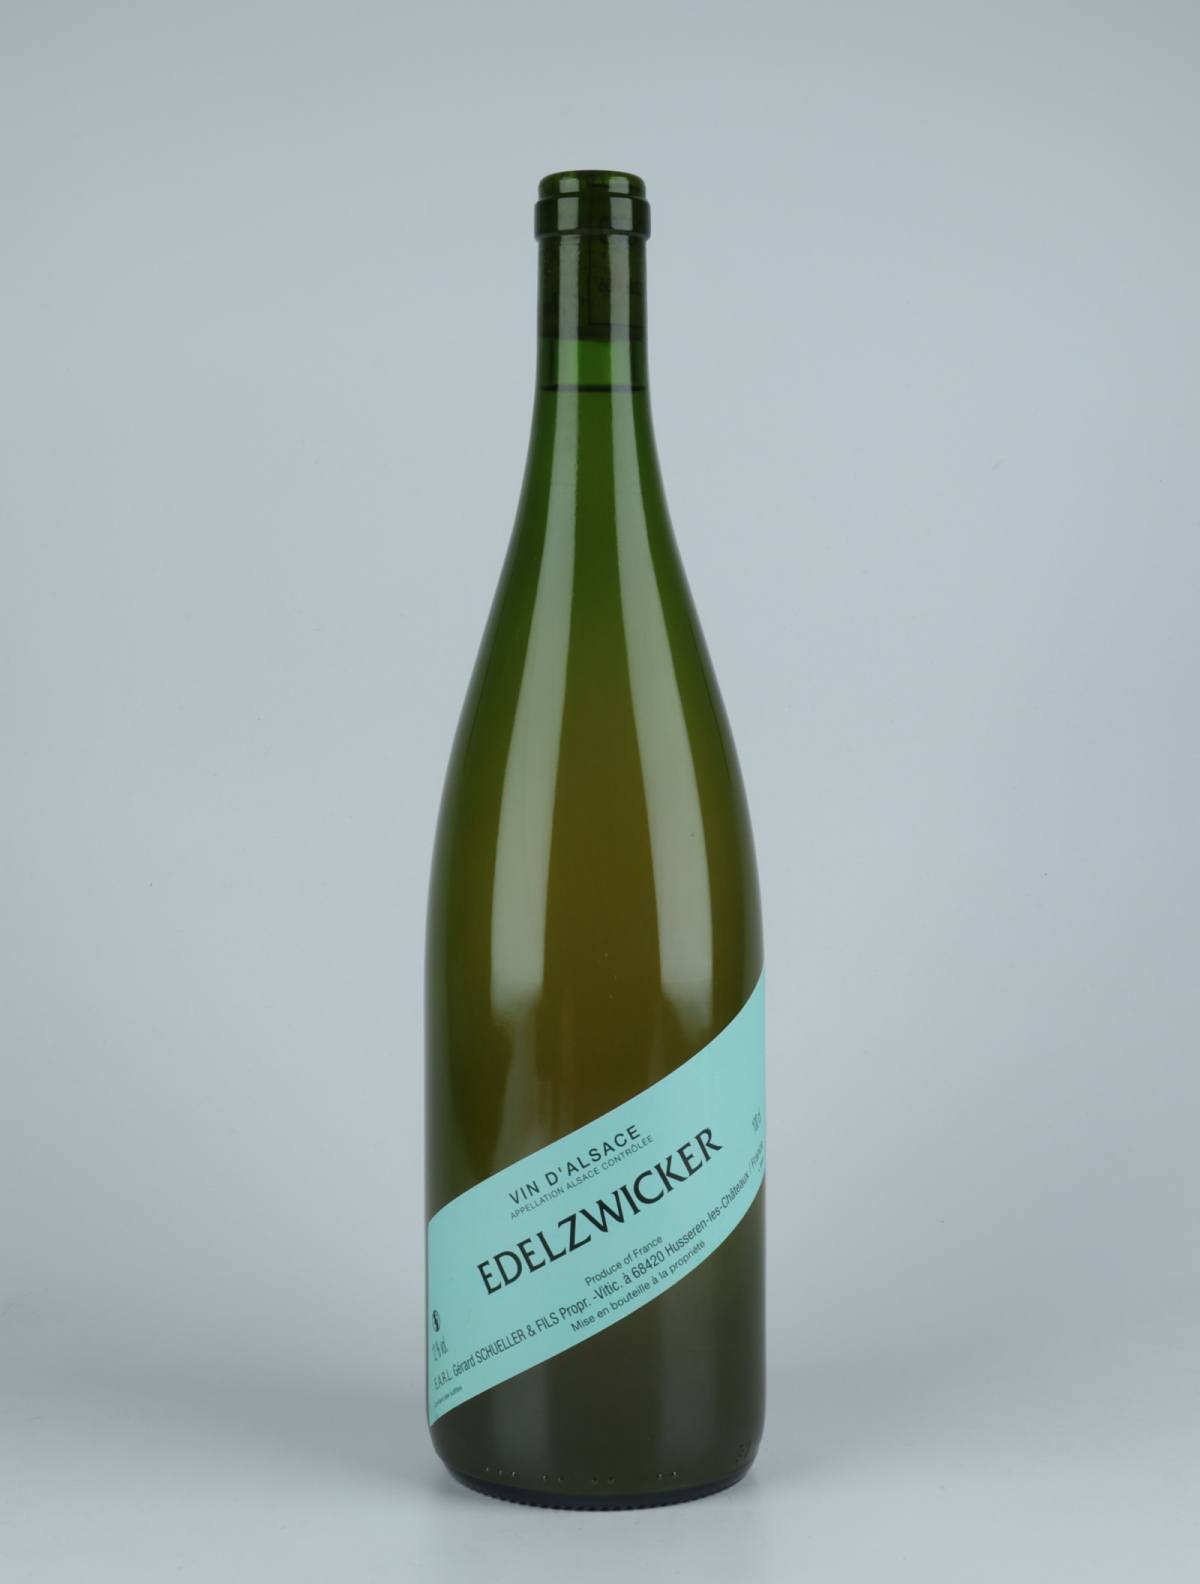 A bottle 2020 Edelzwicker White wine from Gérard Schueller, Alsace in France